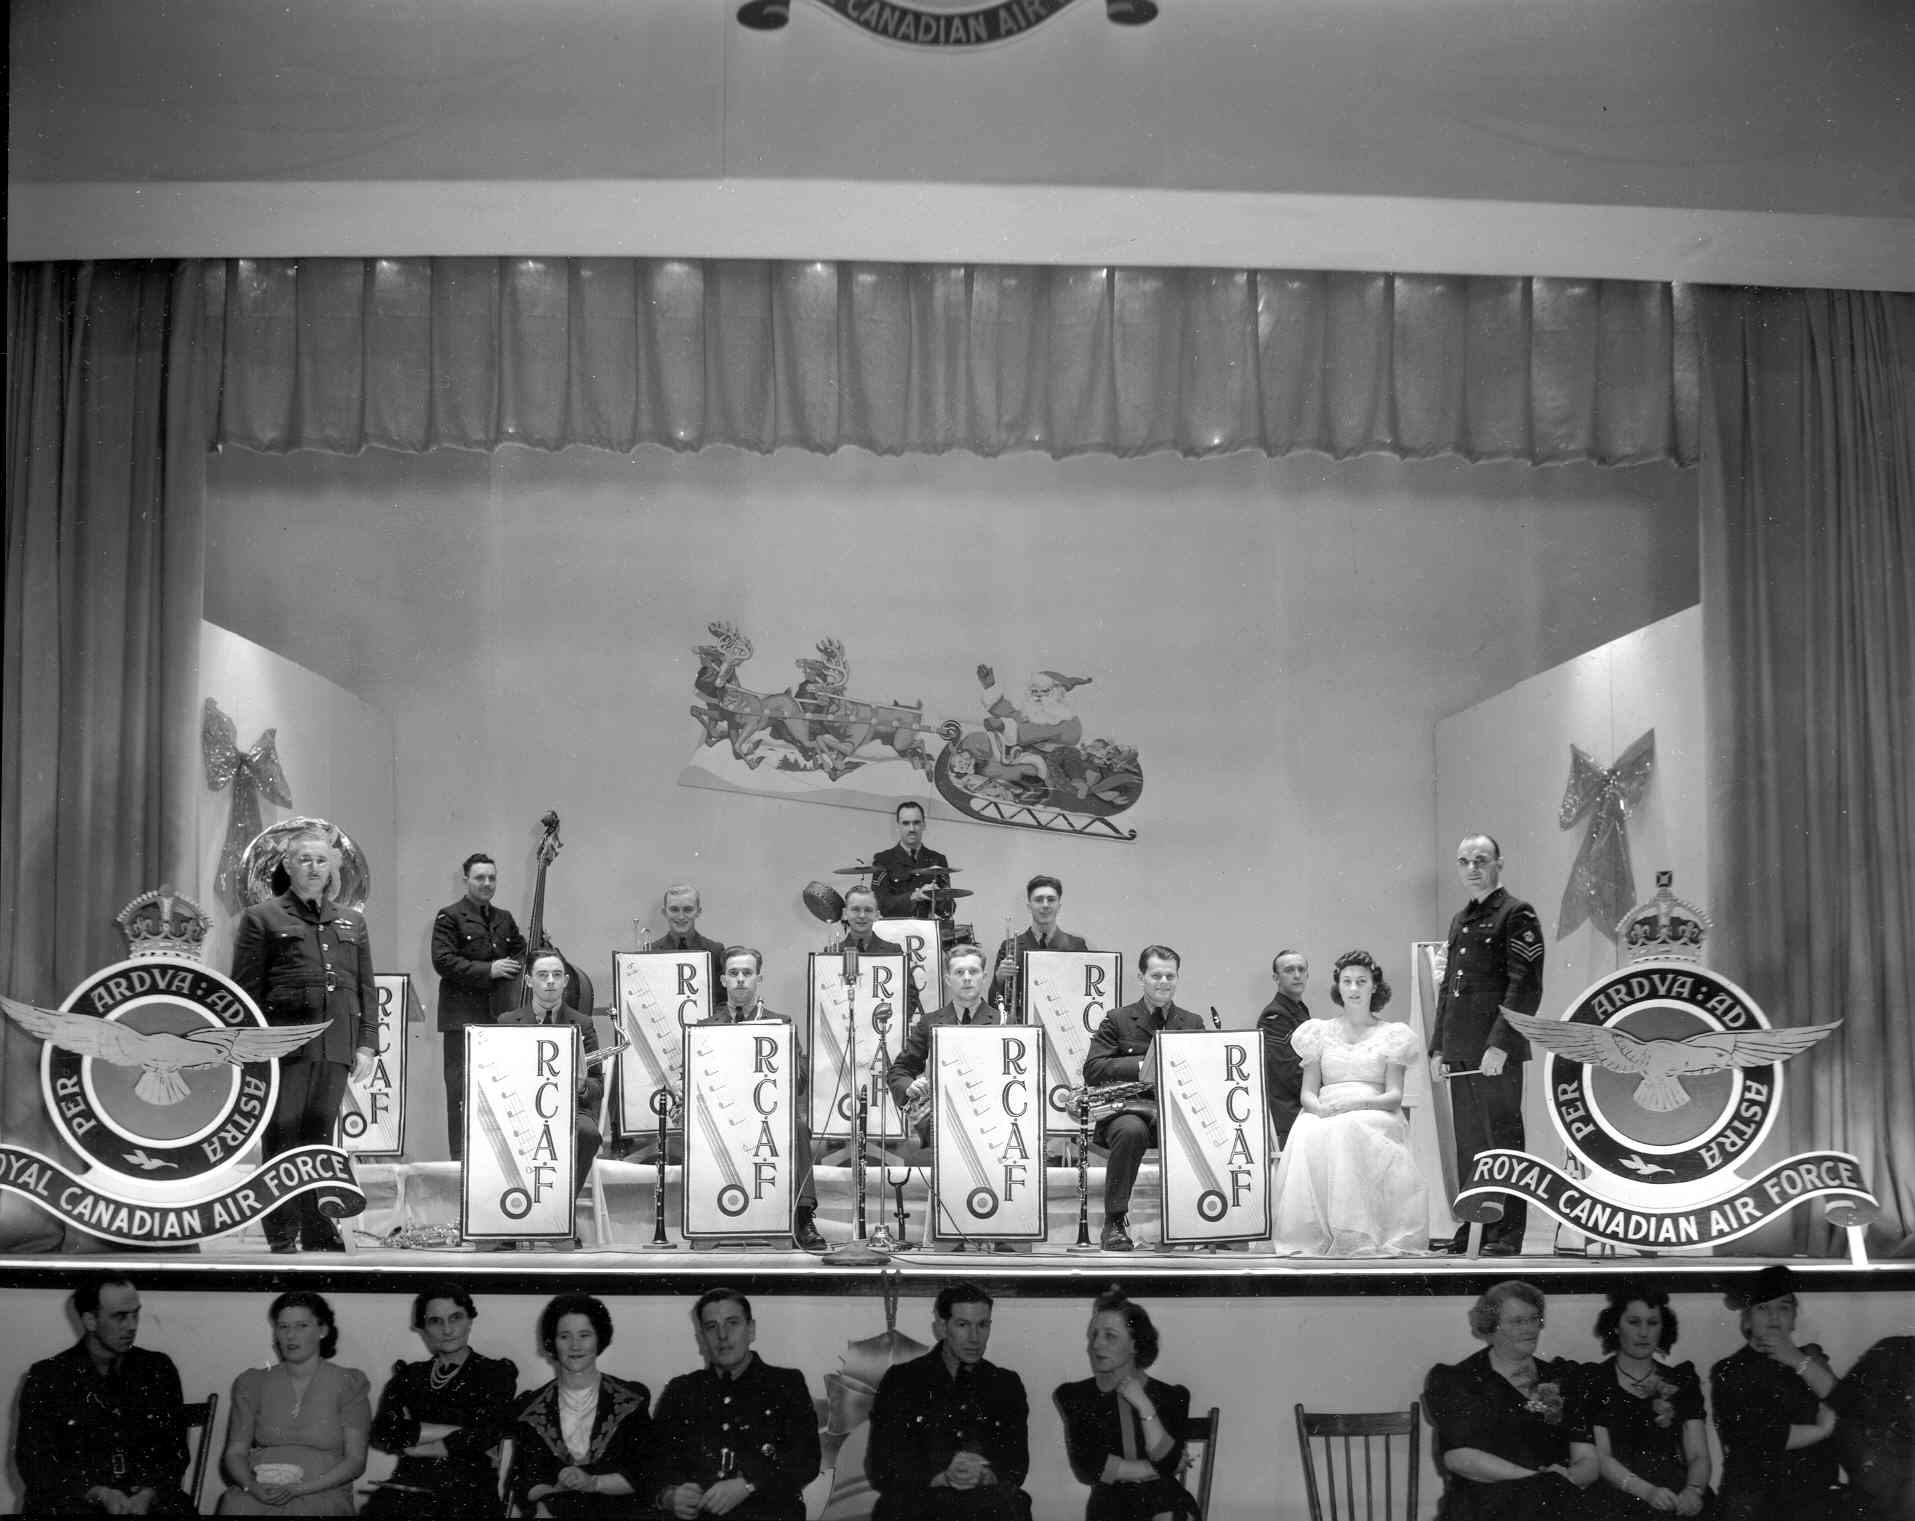 R.C.A.F. Orchestra, ca. 1939.